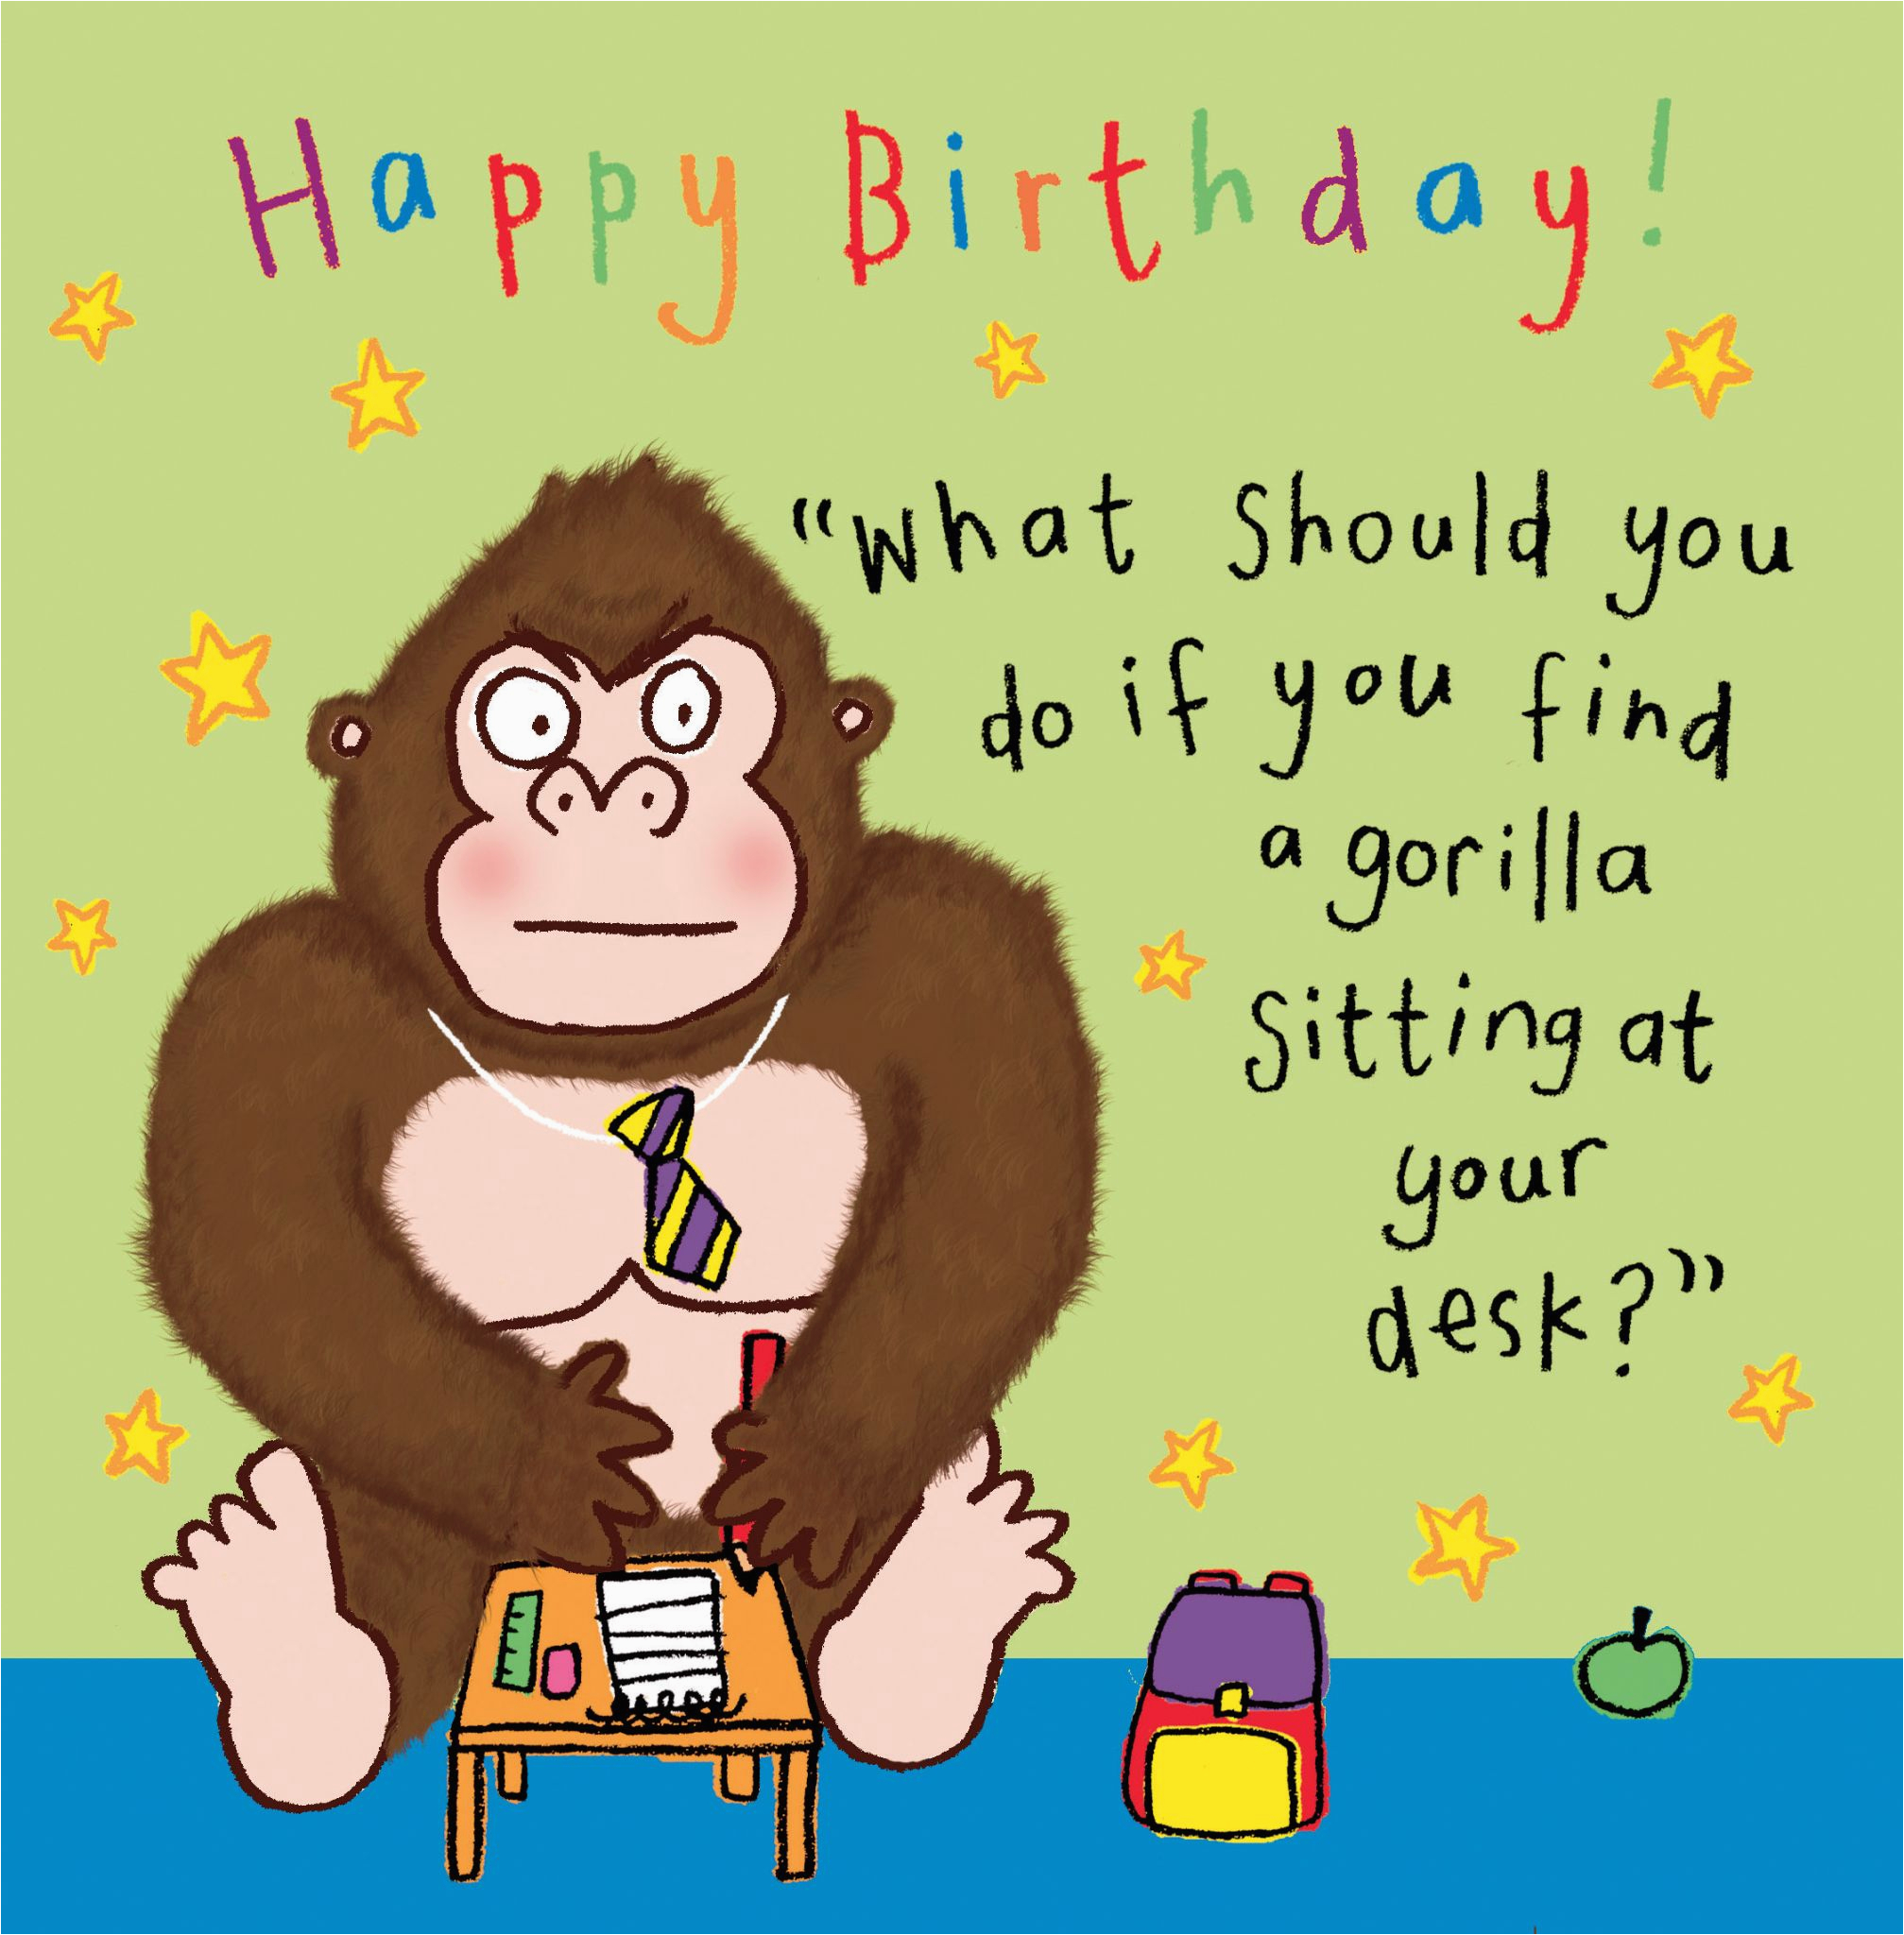 Funny Jokes for Birthday Cards Gorilla Funny Joke Birthday Card for Kids Tw434